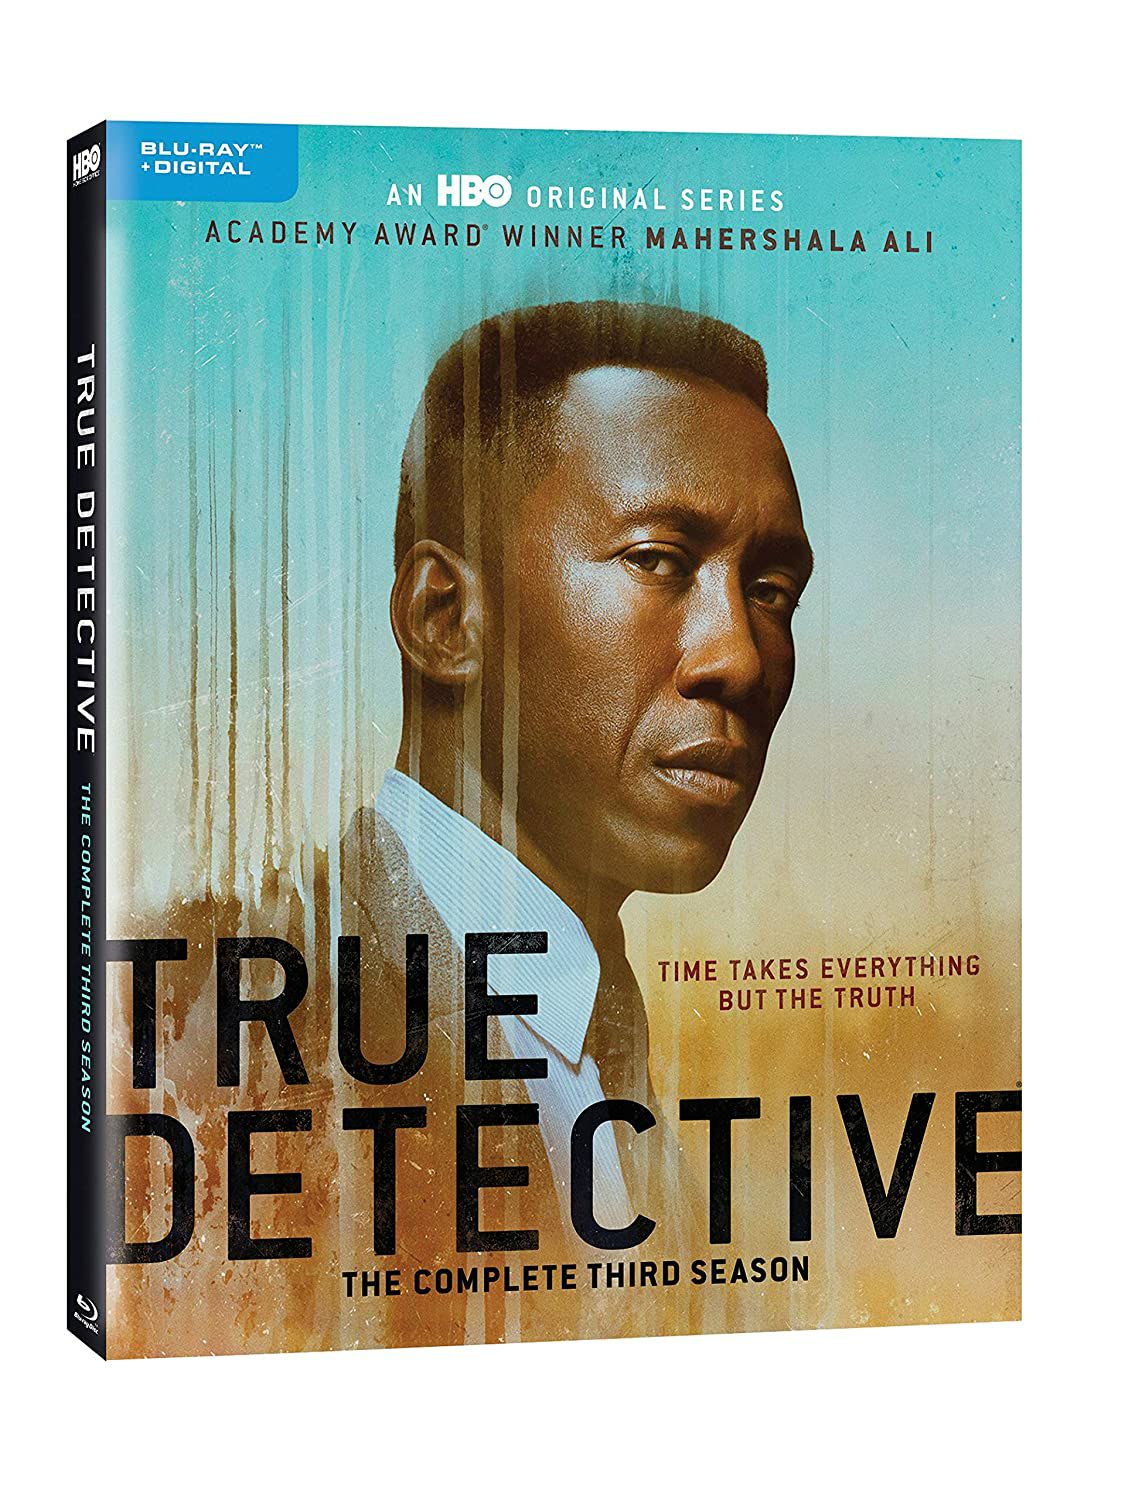 True Detective: Season 3 (Digital Copy + Bluray) [Blu-ray]: Peter Feldman, Nic Pizzolatto, Scott Stephens, Dan Sackheim, Jeremy Saulnier, Steve Golin, Richard Brown, Ba $13.00